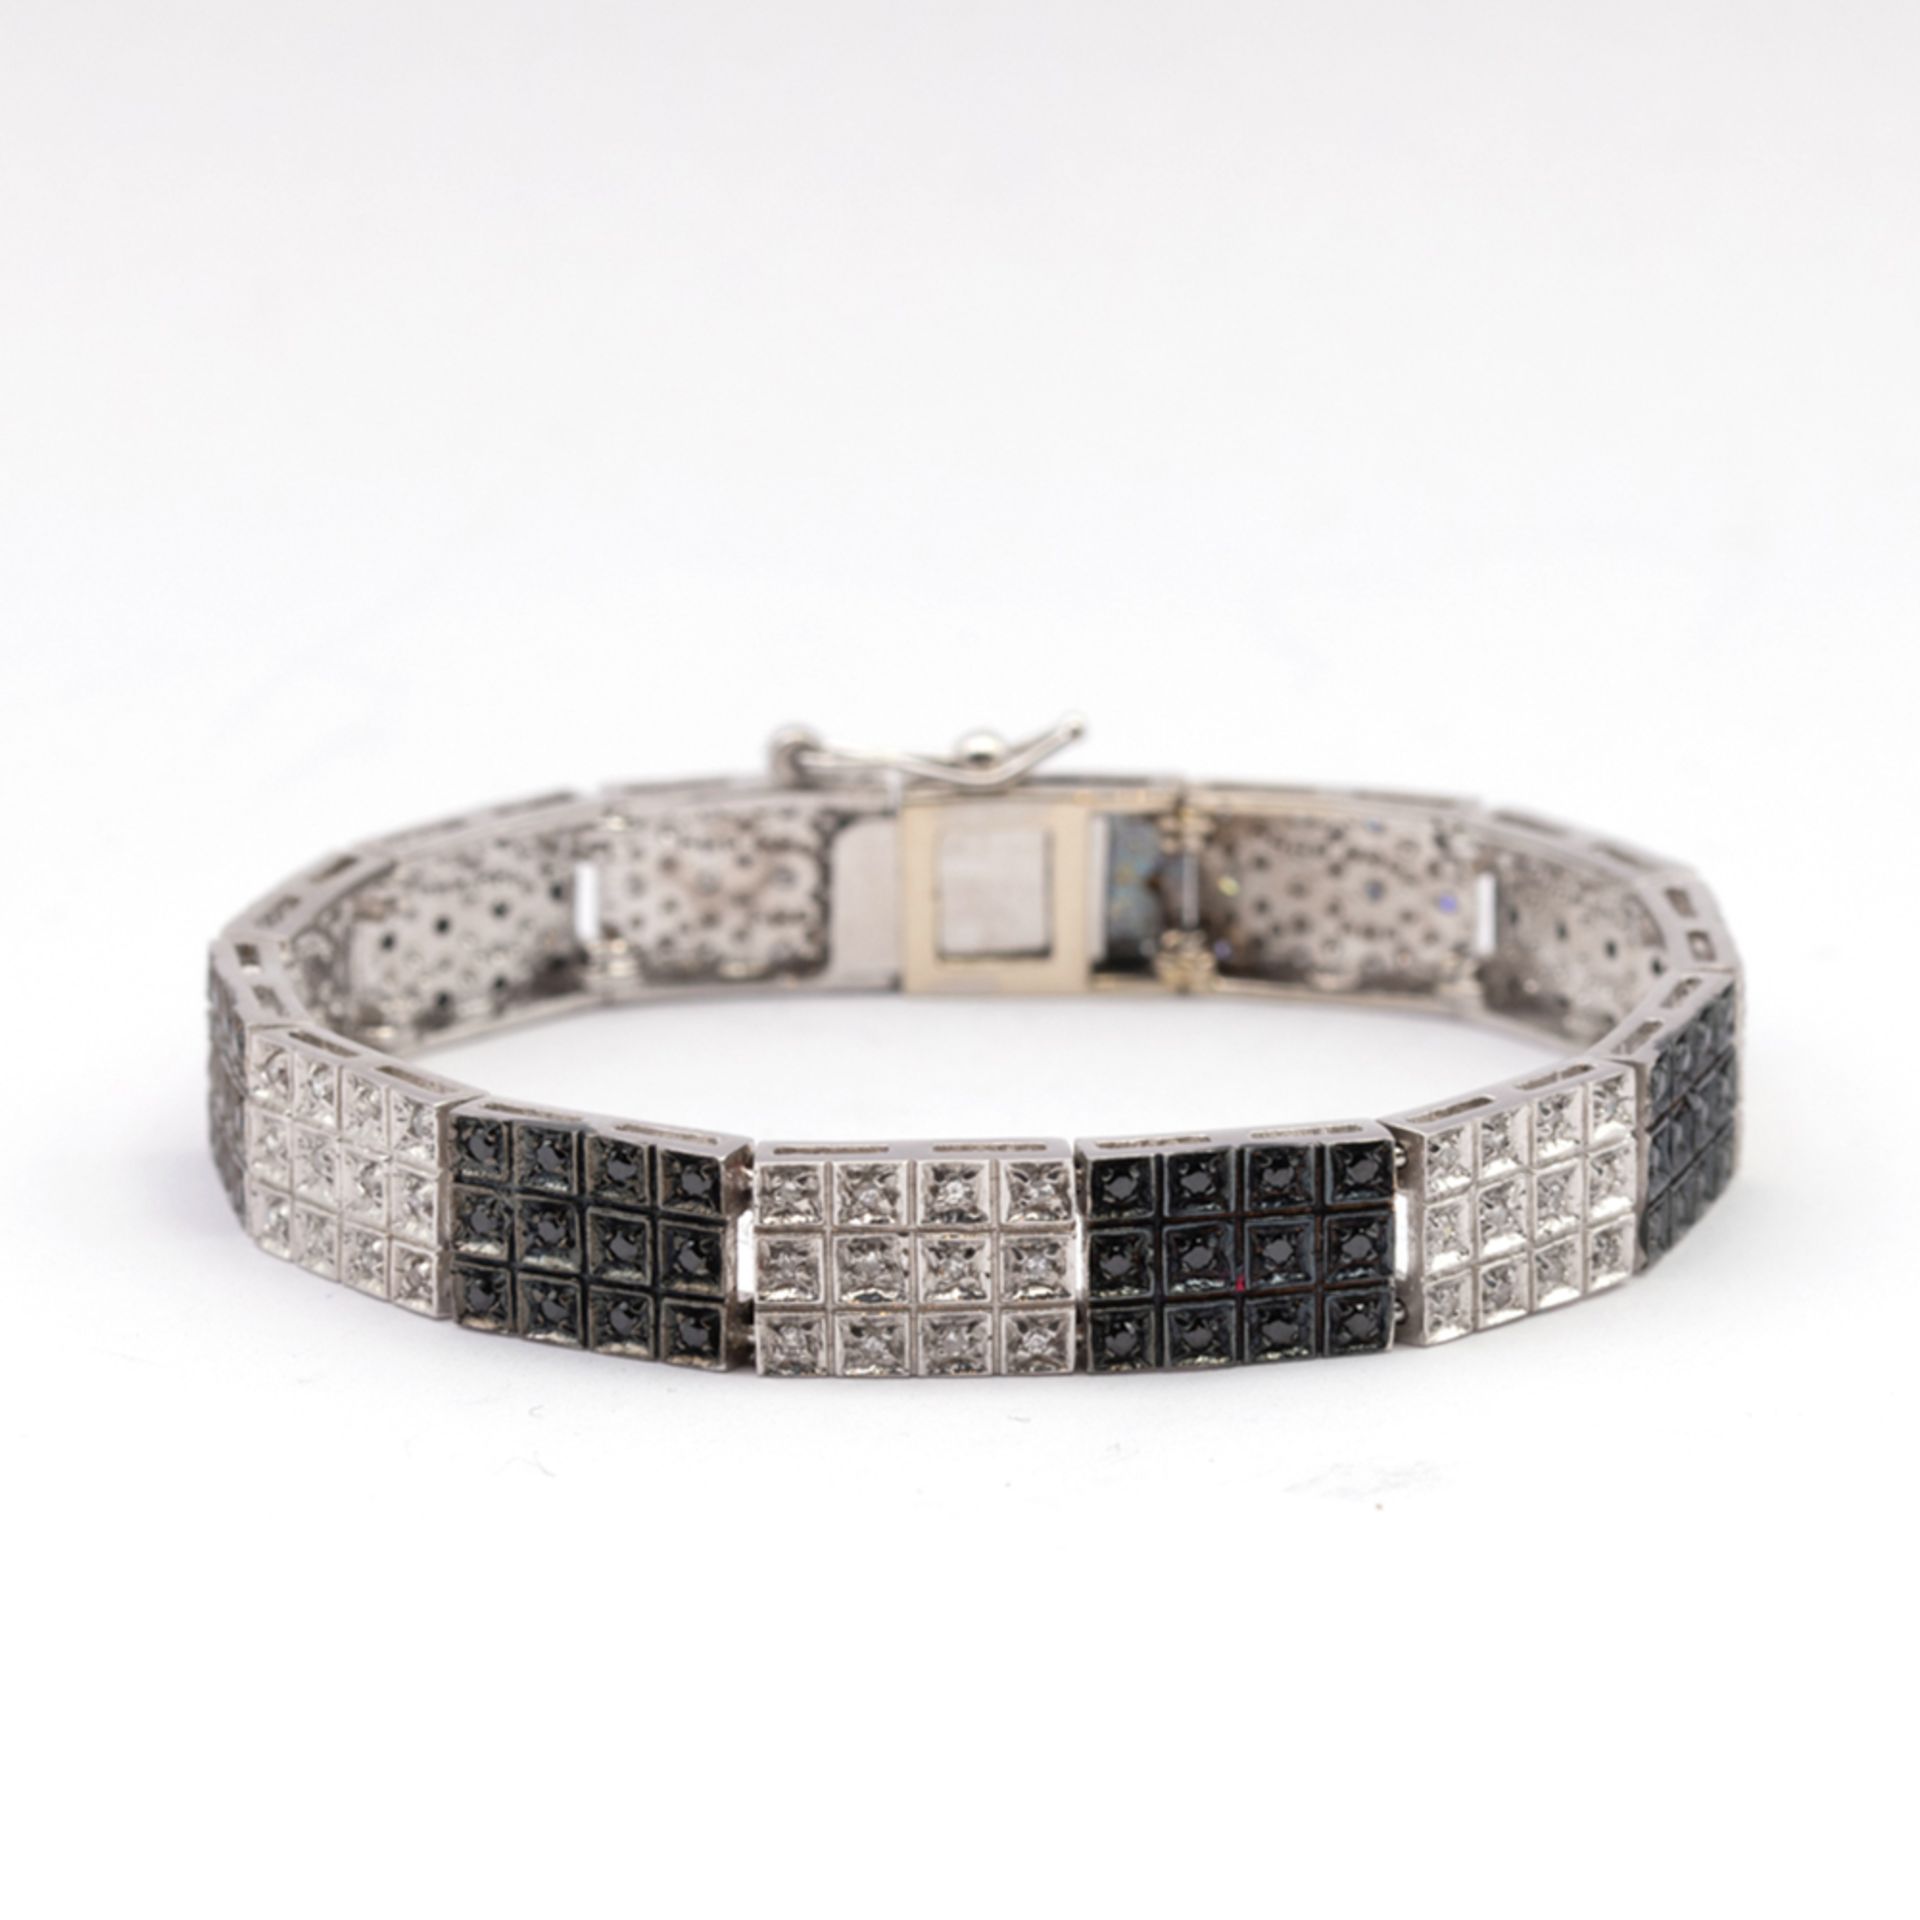 18kt white gold diamond and black diamond bracelet - Image 2 of 2